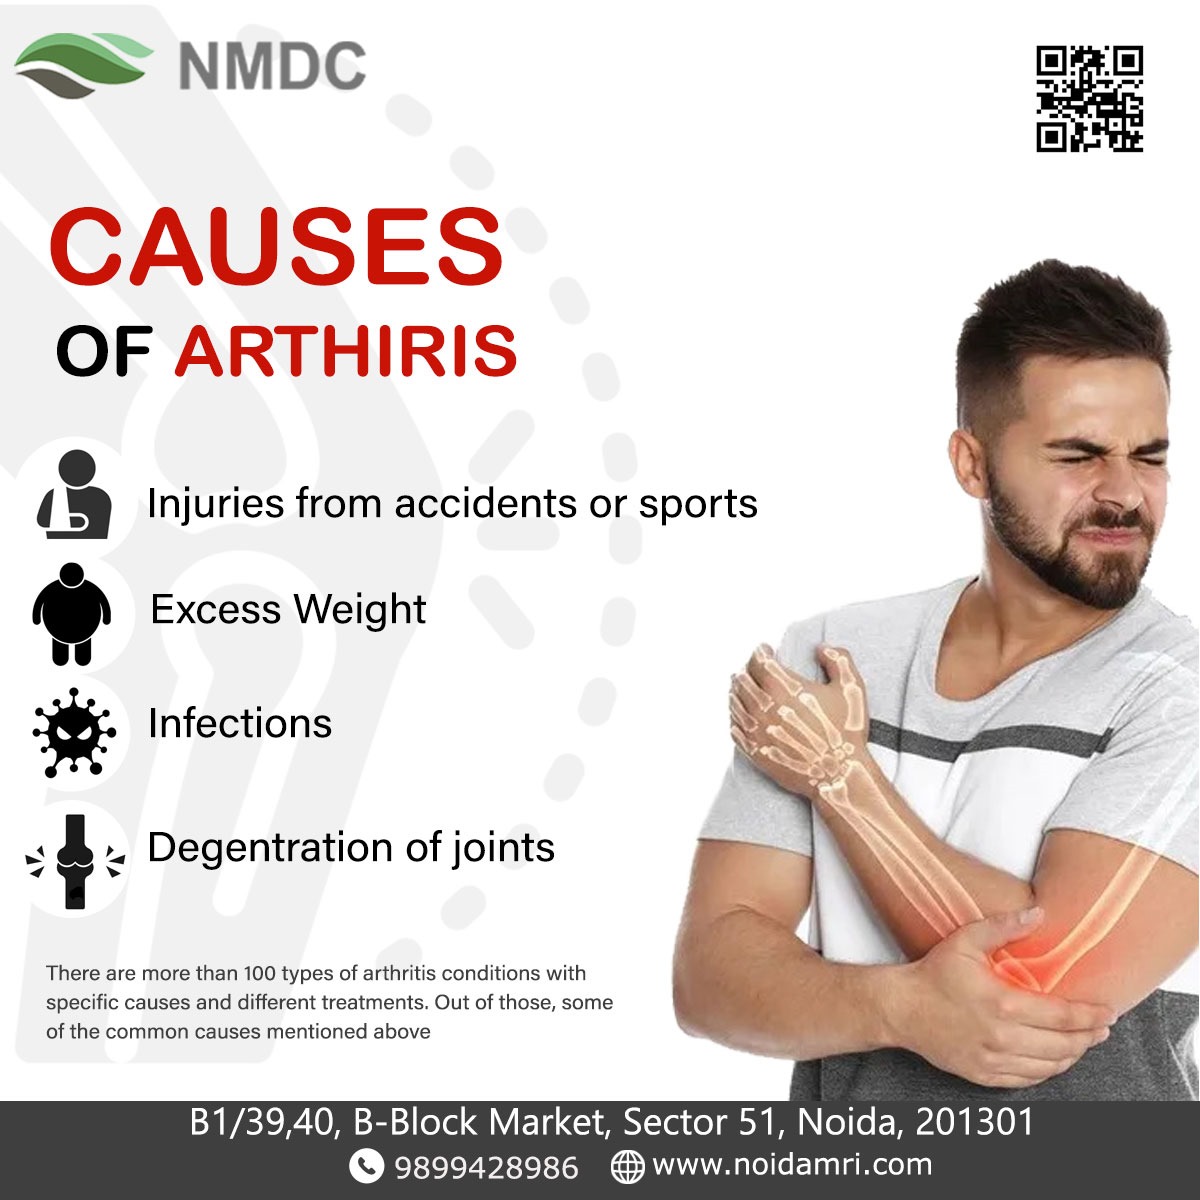 Causes of Arthritis